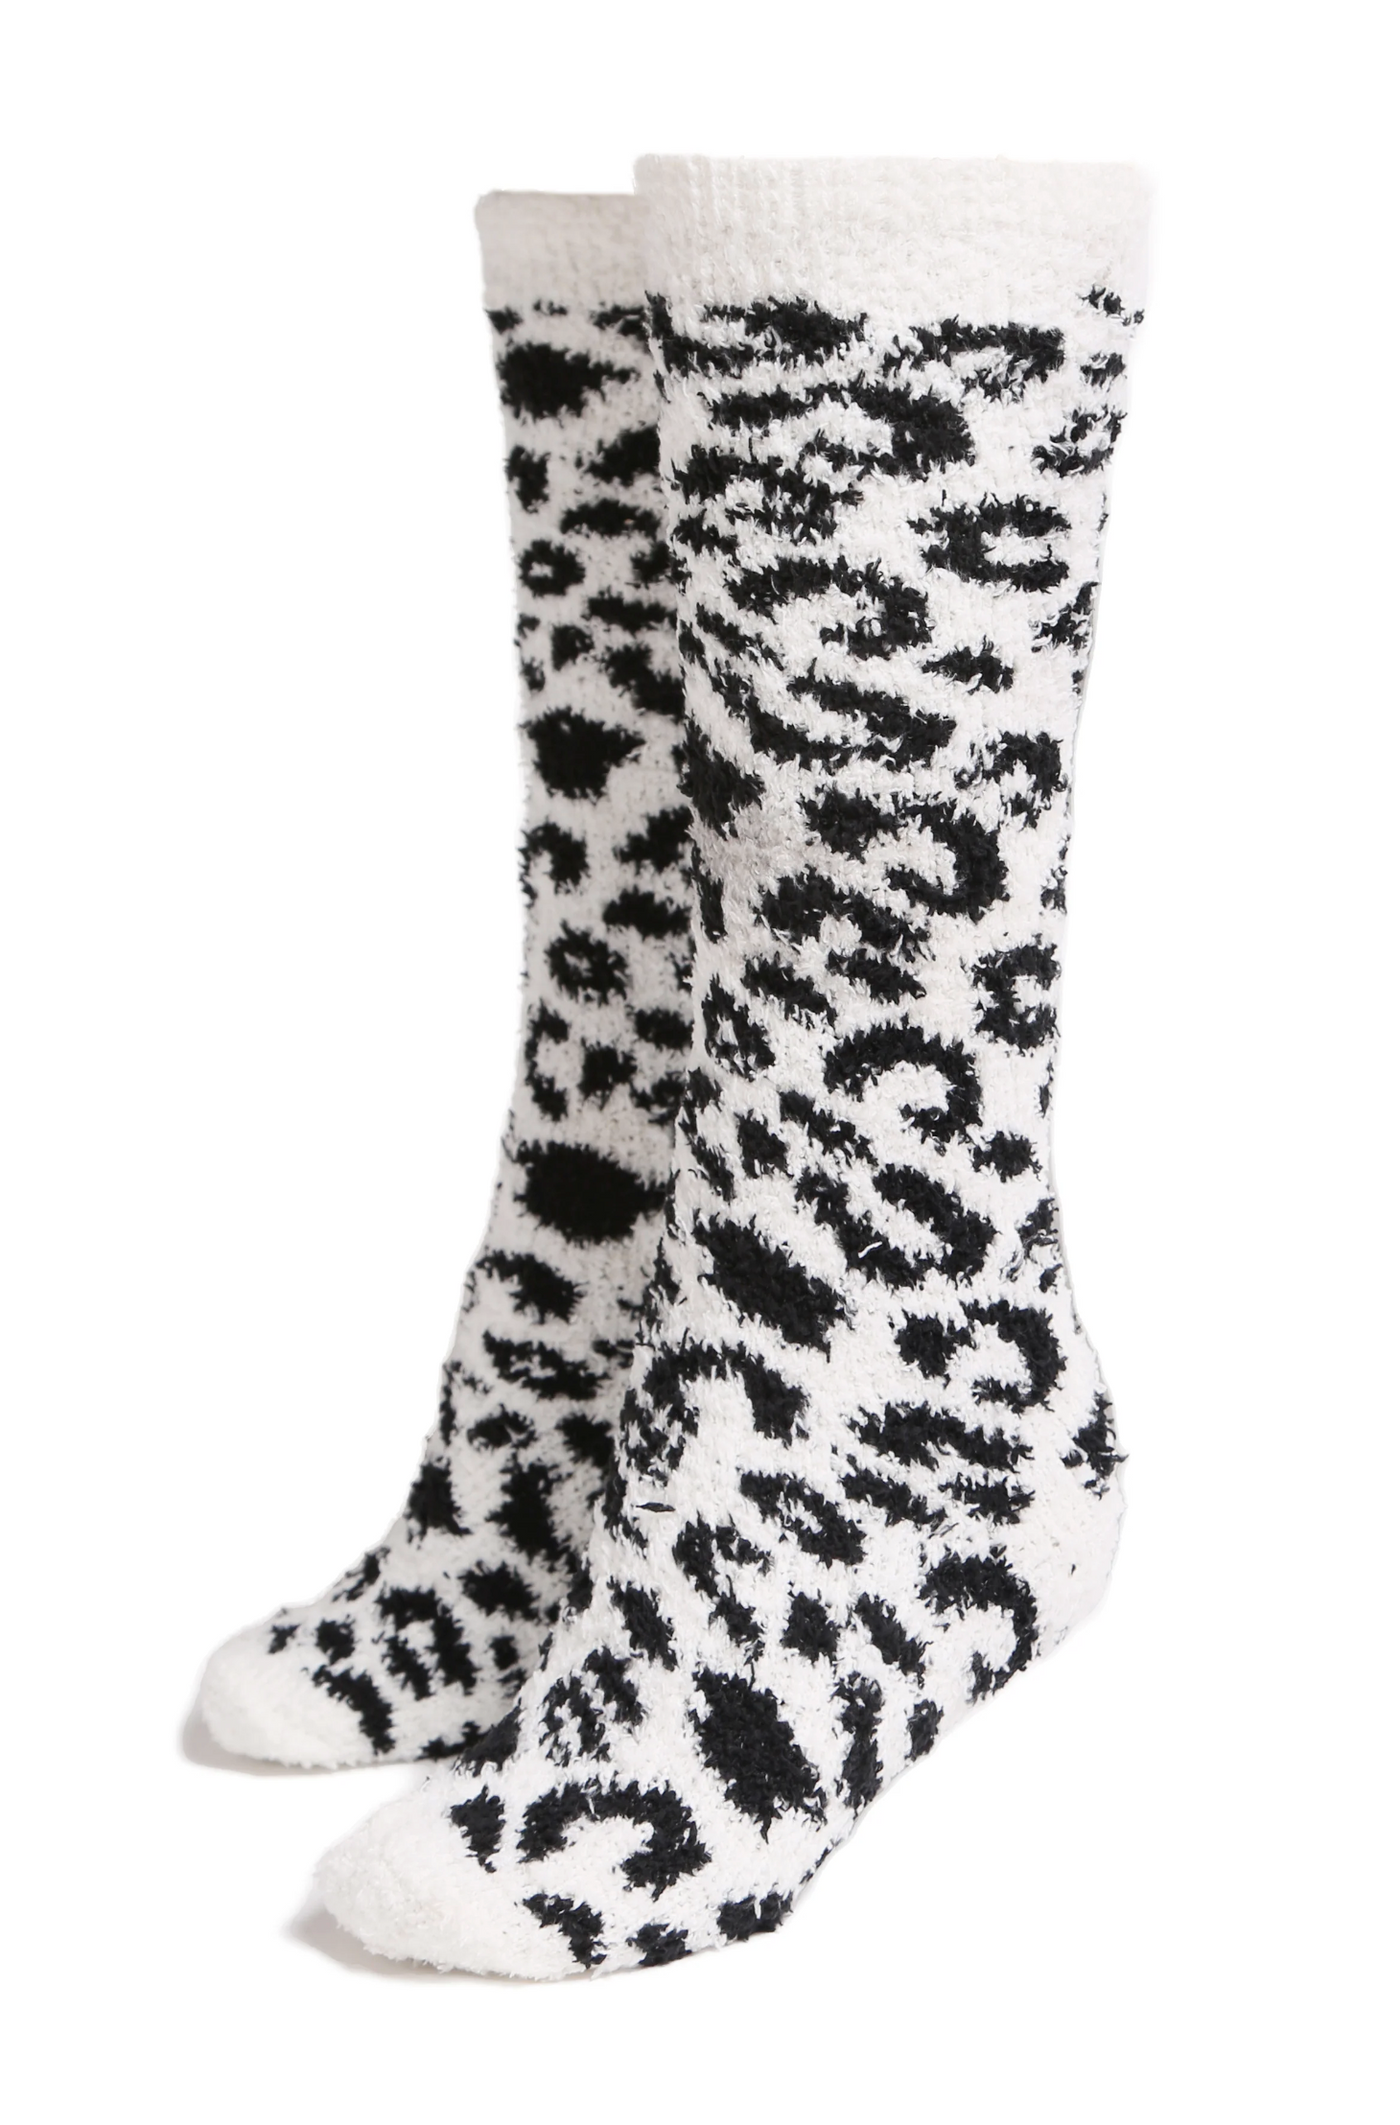 Leopard Knee High Socks